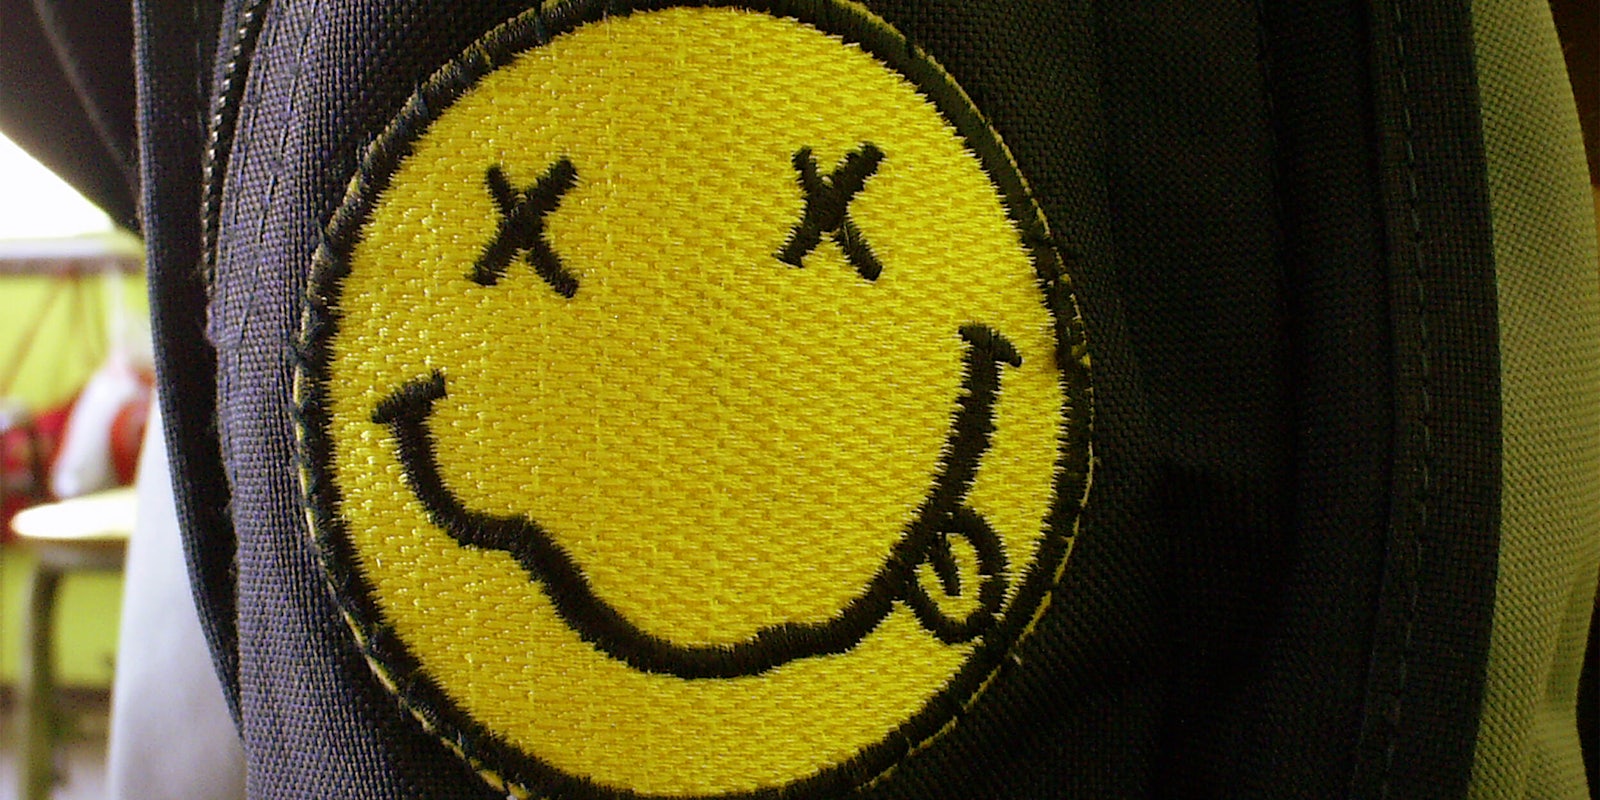 Nirvana smiley face patch